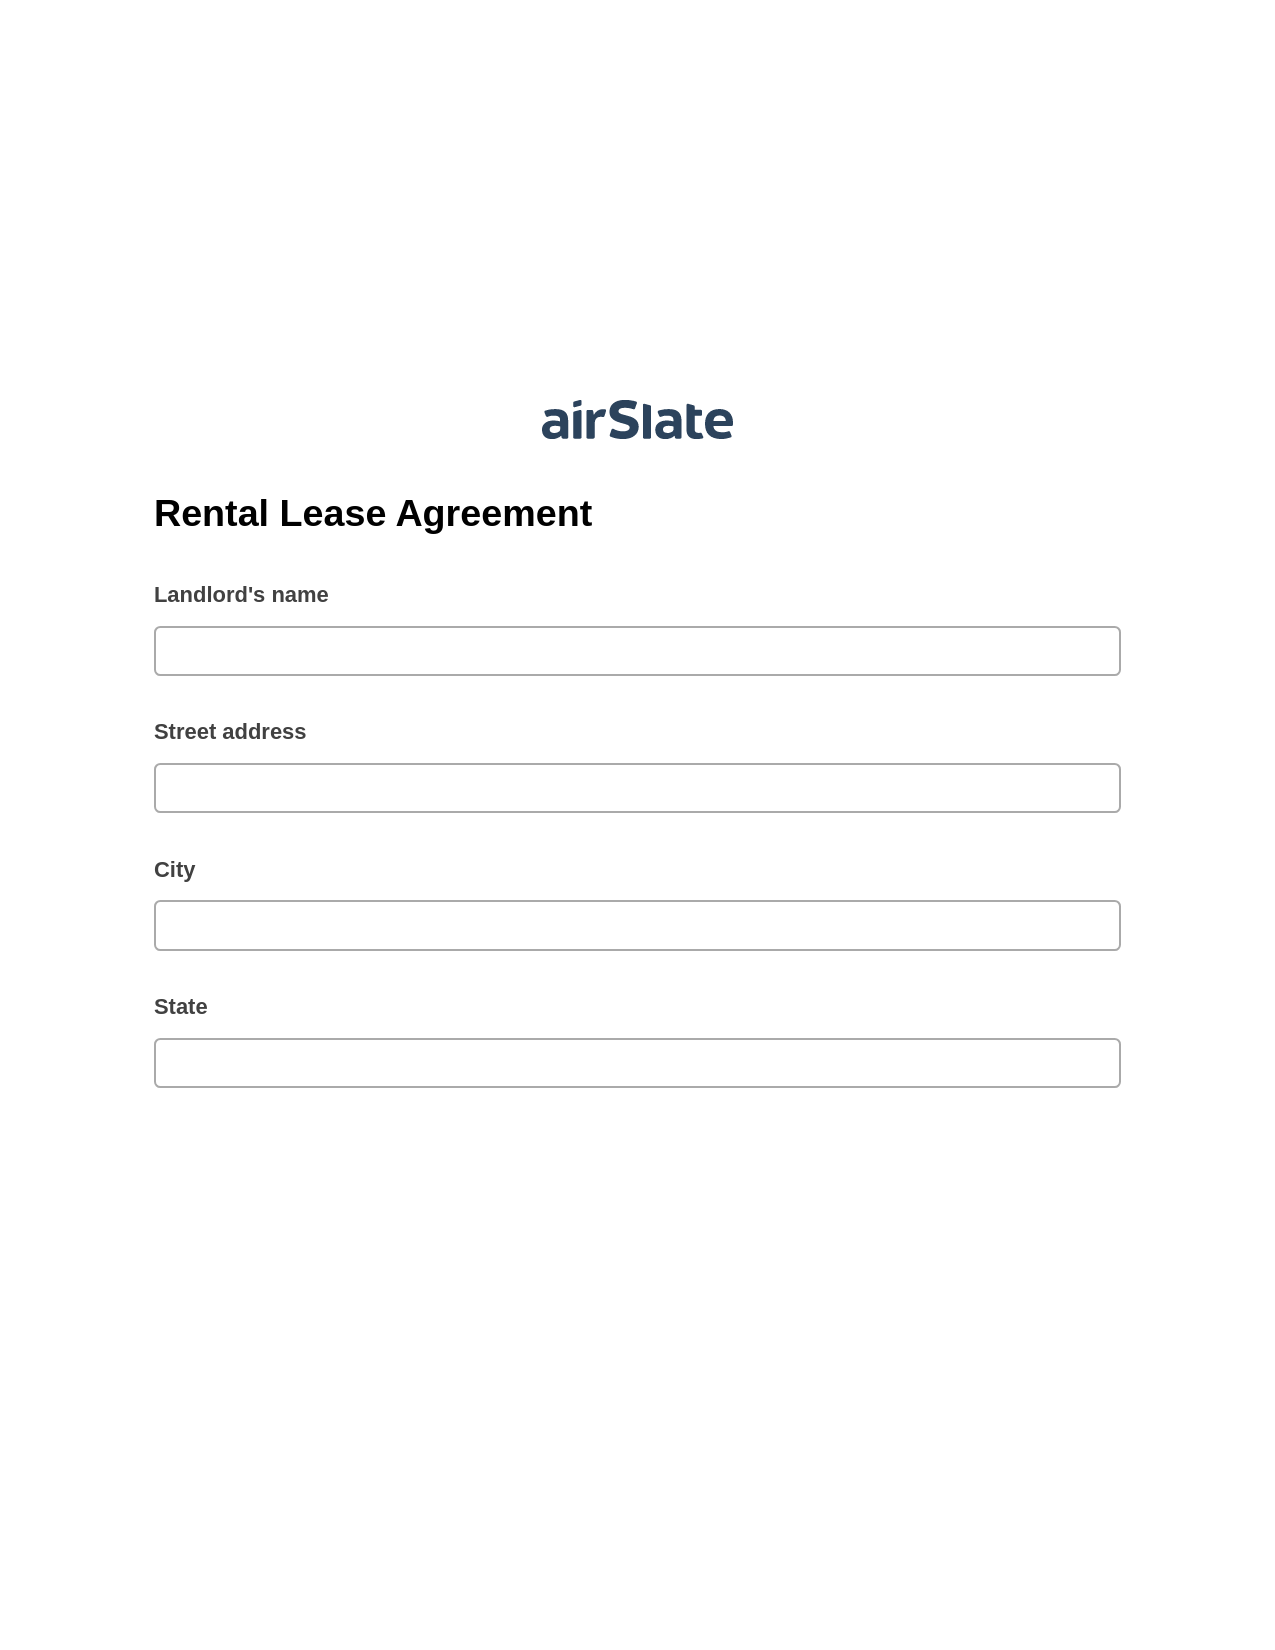 Multirole Rental Lease Agreement Pre-fill from Google Sheet Dropdown Options Bot, SendGrid send Campaign bot, Slack Notification Postfinish Bot